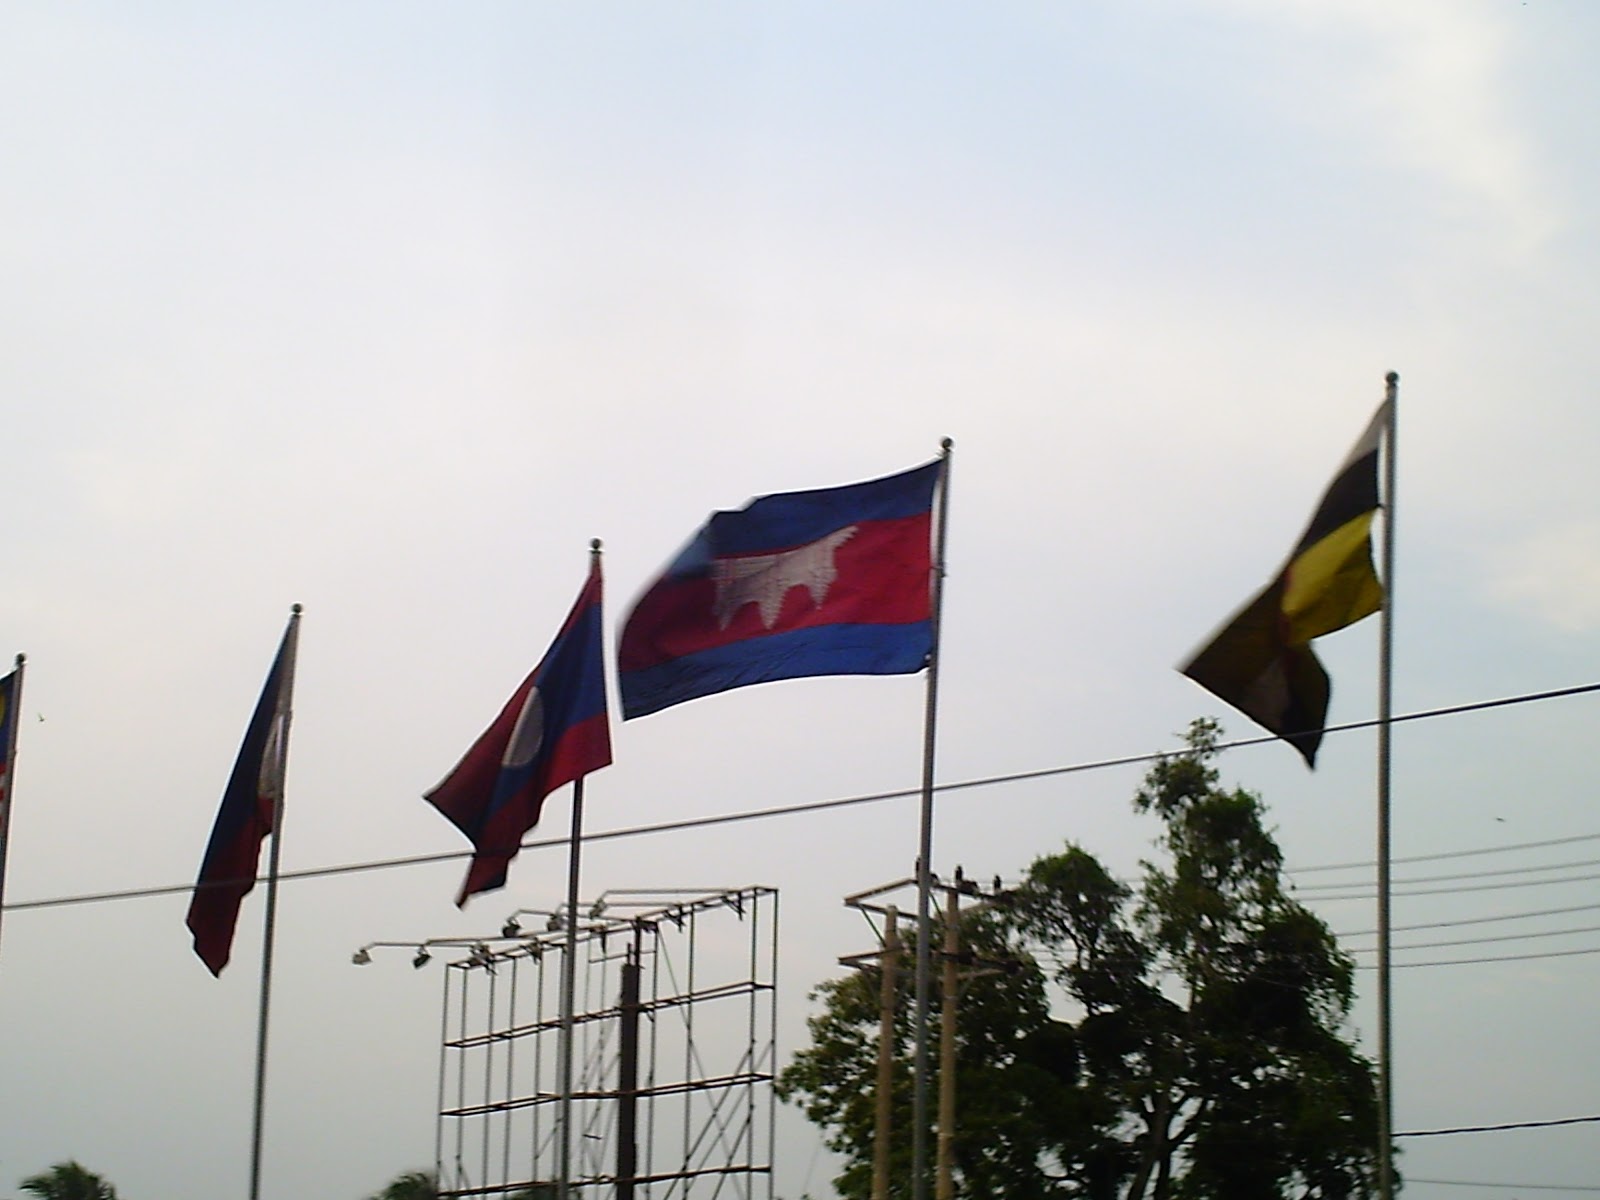 imajiedotcom: Kamboja menjadi Korban